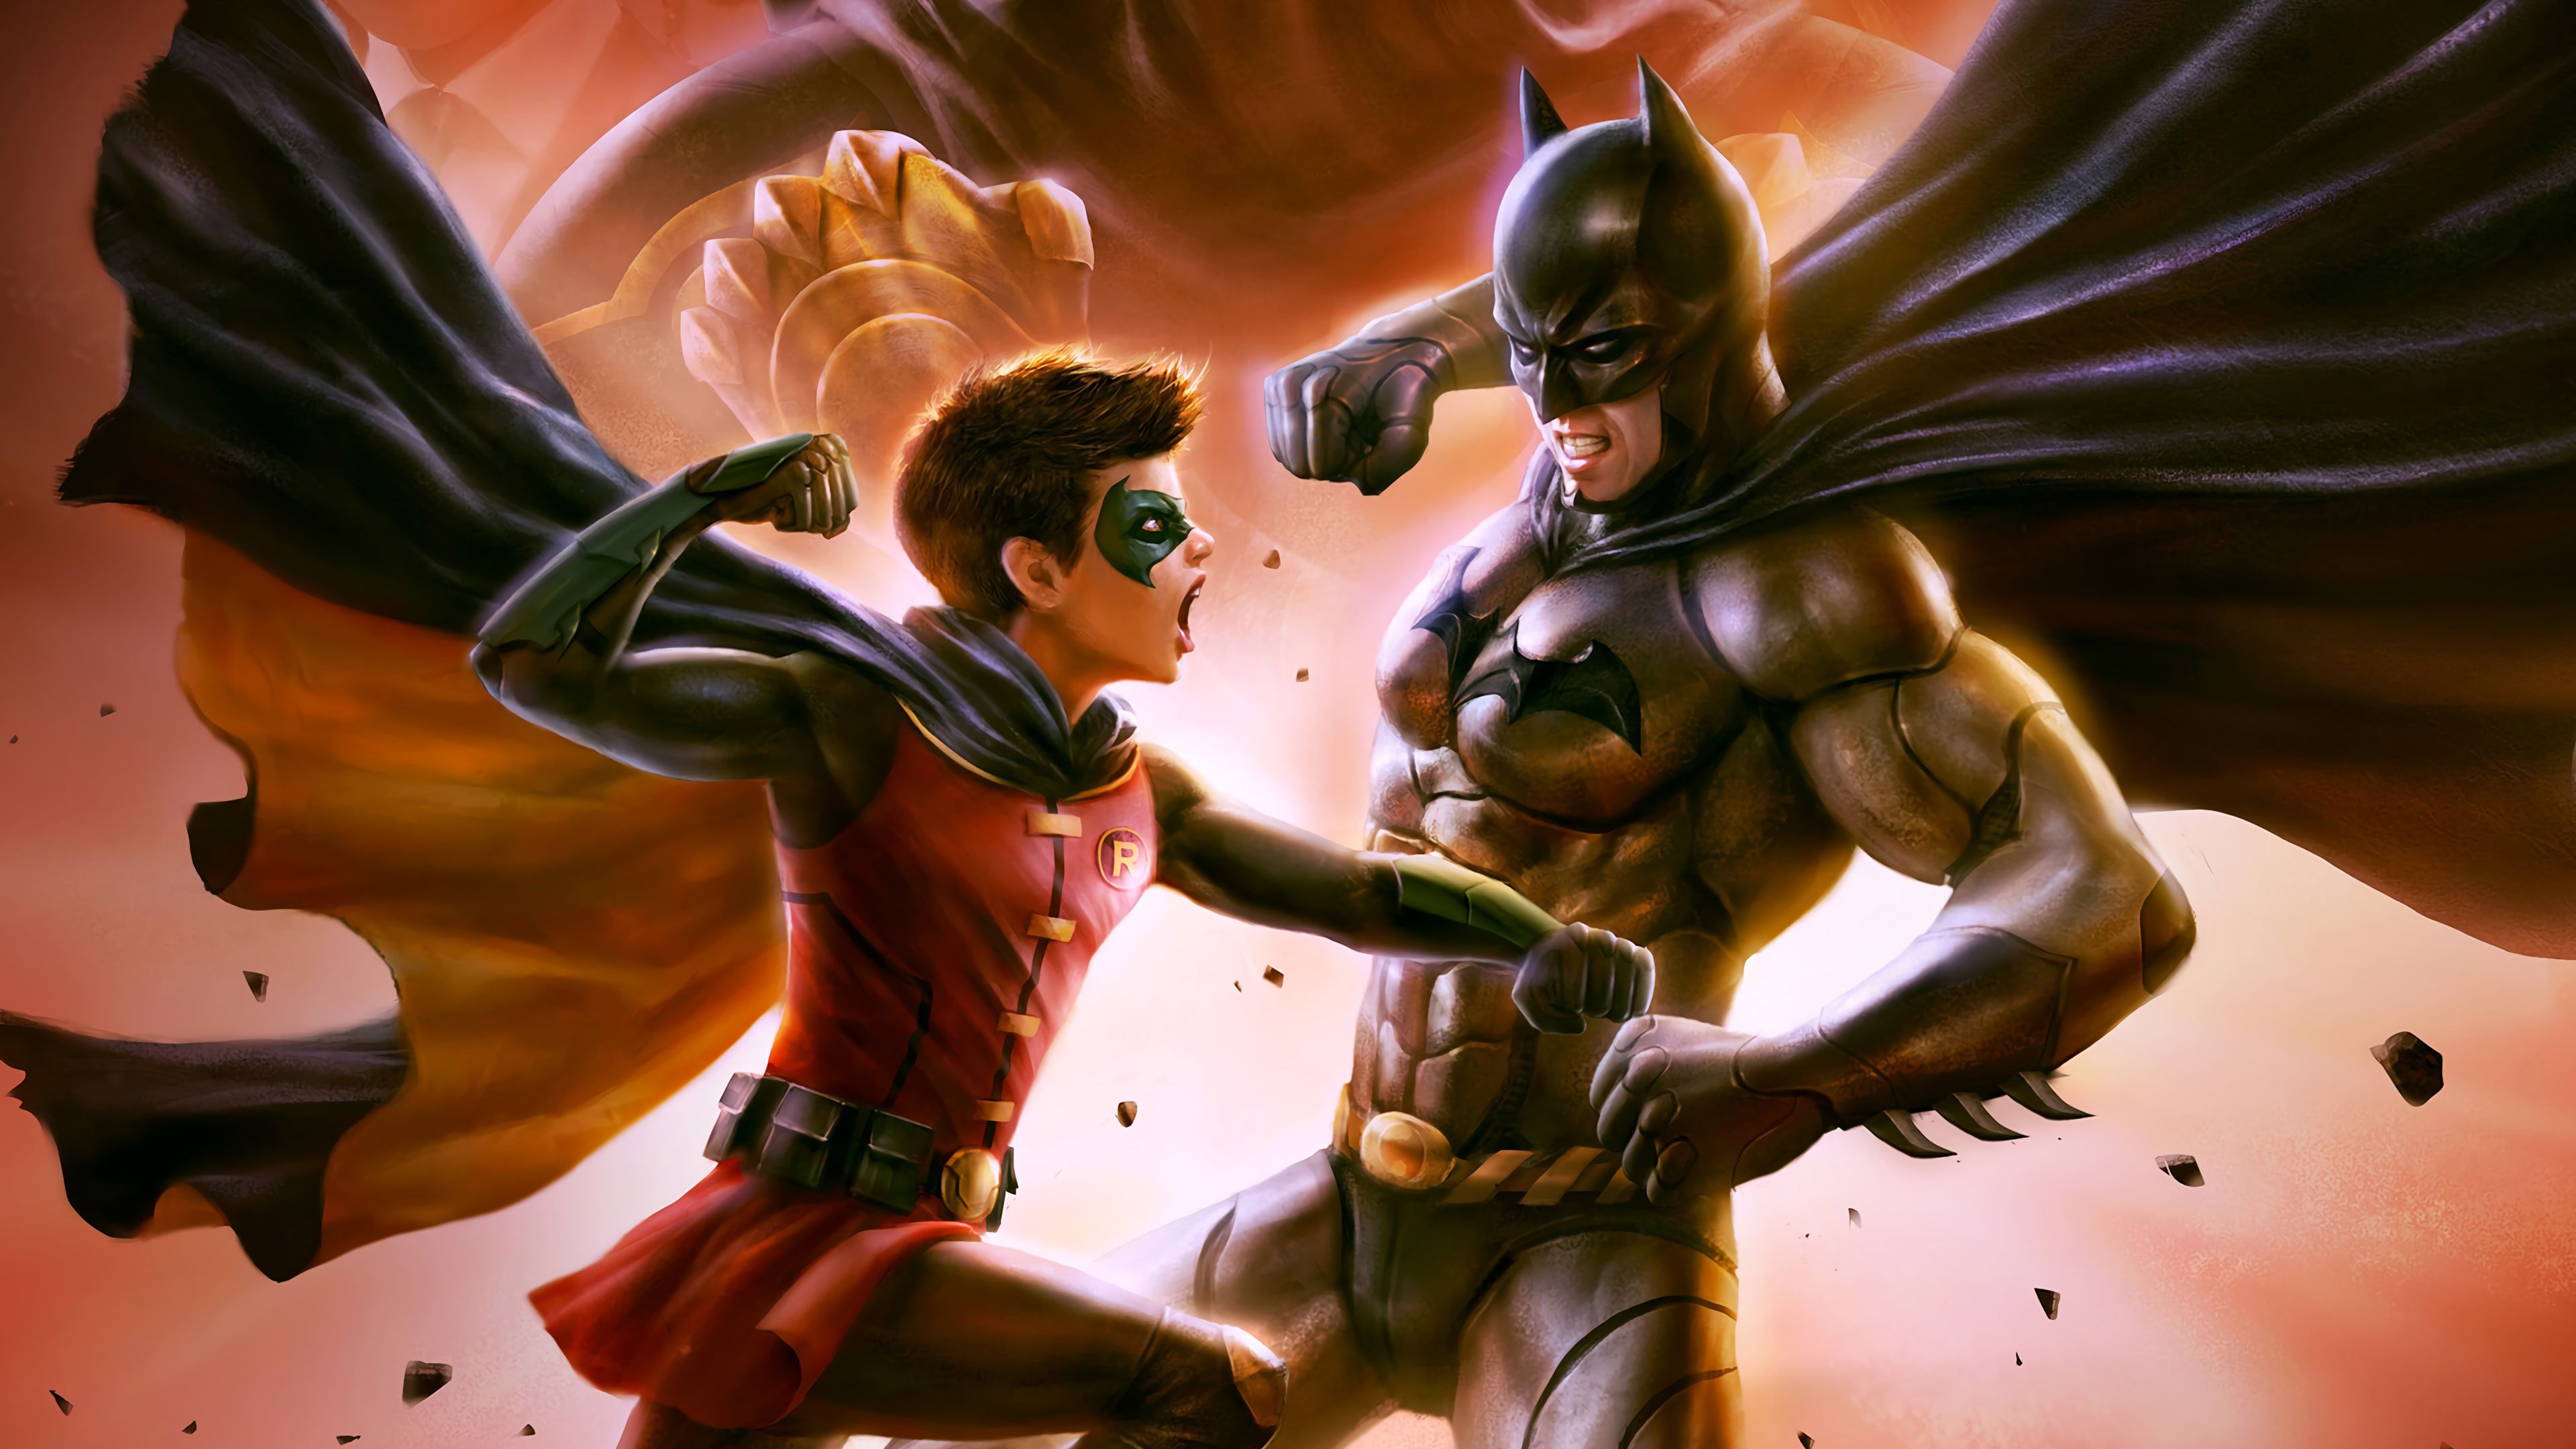 Batman Vs Robin, HD Superheroes, 4k Wallpaper, Image, Background, Photo and Picture